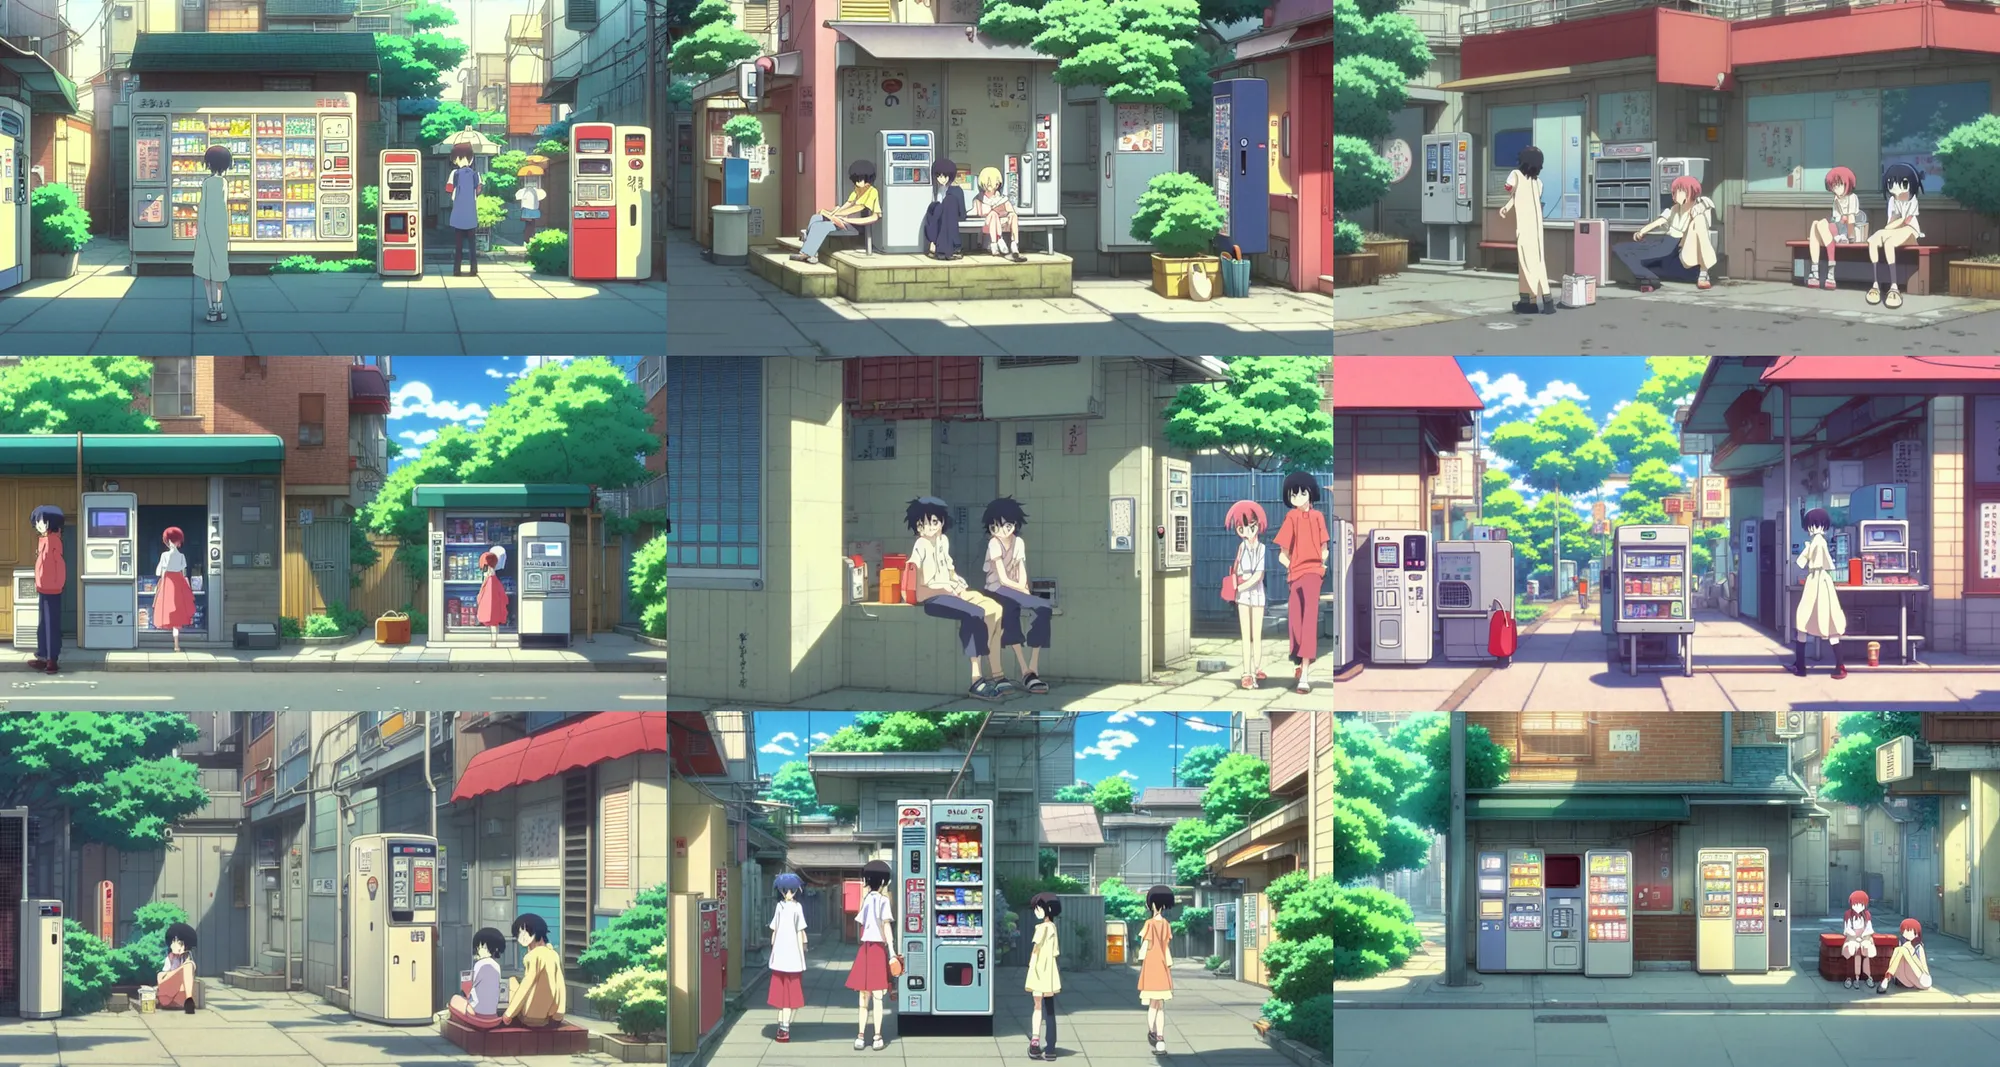 Prompt: beautiful slice of life anime scene of suburban alleyway, vending machine, relaxing, calm, cozy, peaceful, by mamoru hosoda, hayao miyazaki, makoto shinkai